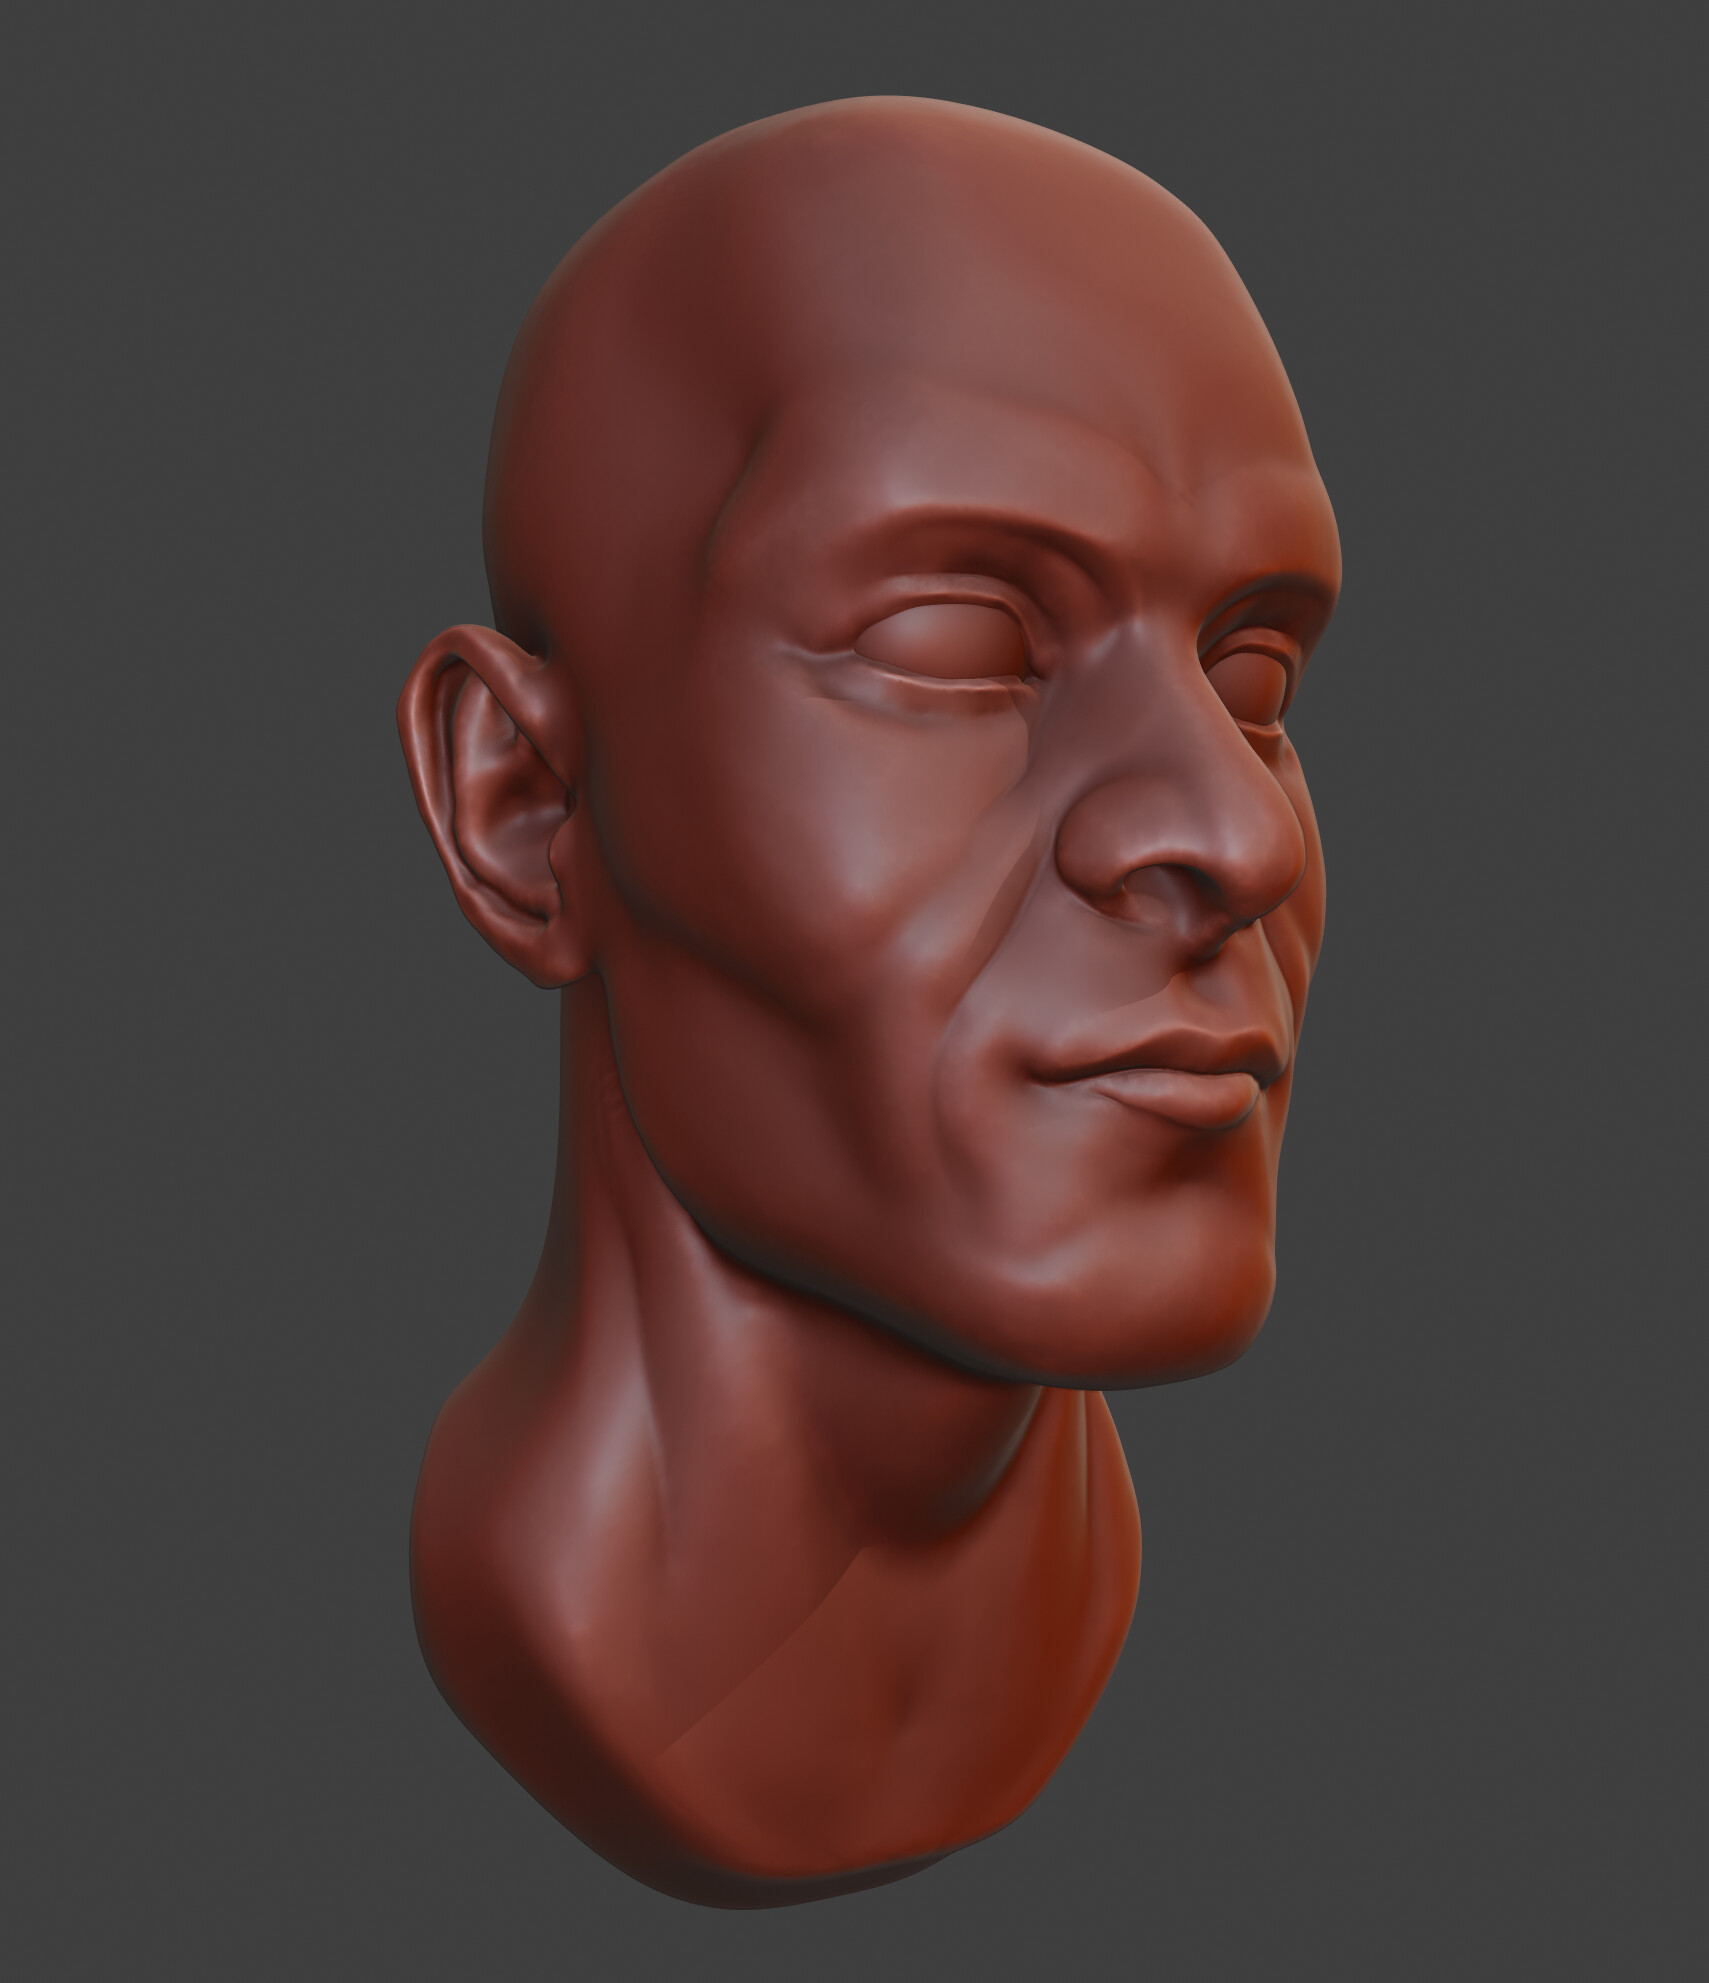 ArtStation - Stylized Face Sculpt tutorial